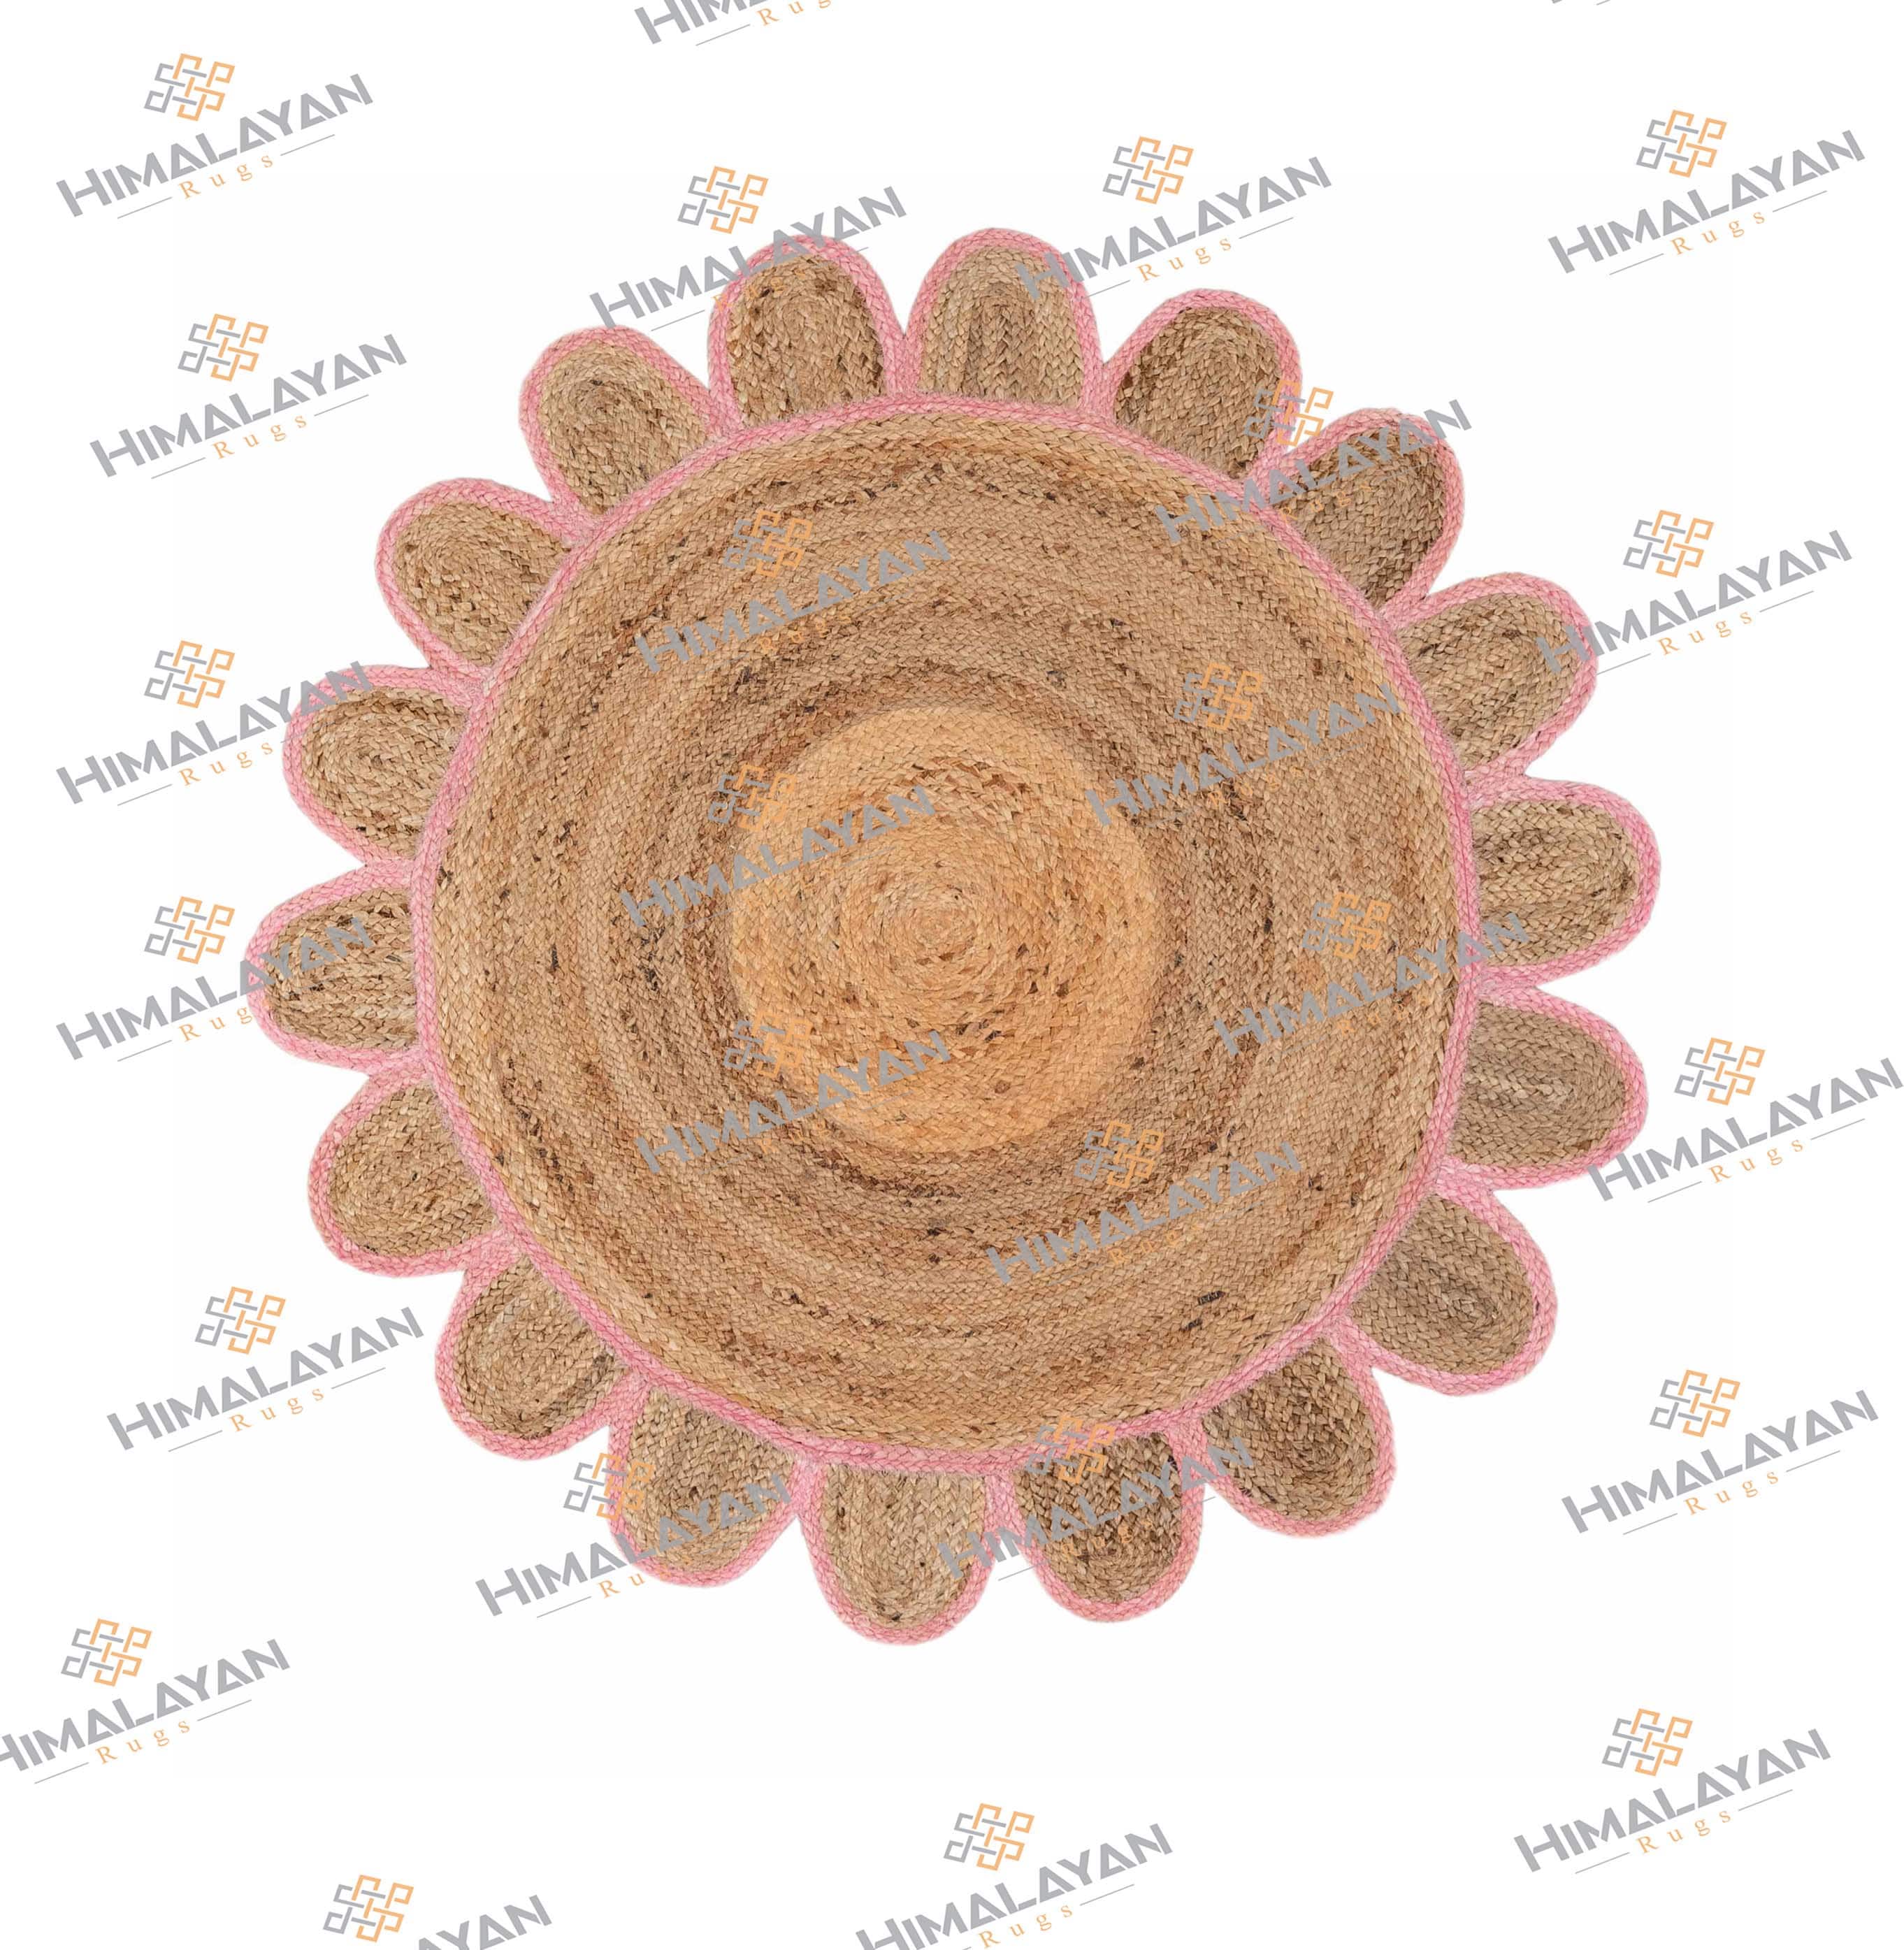 cheersee corduroy round custom printed moroccan